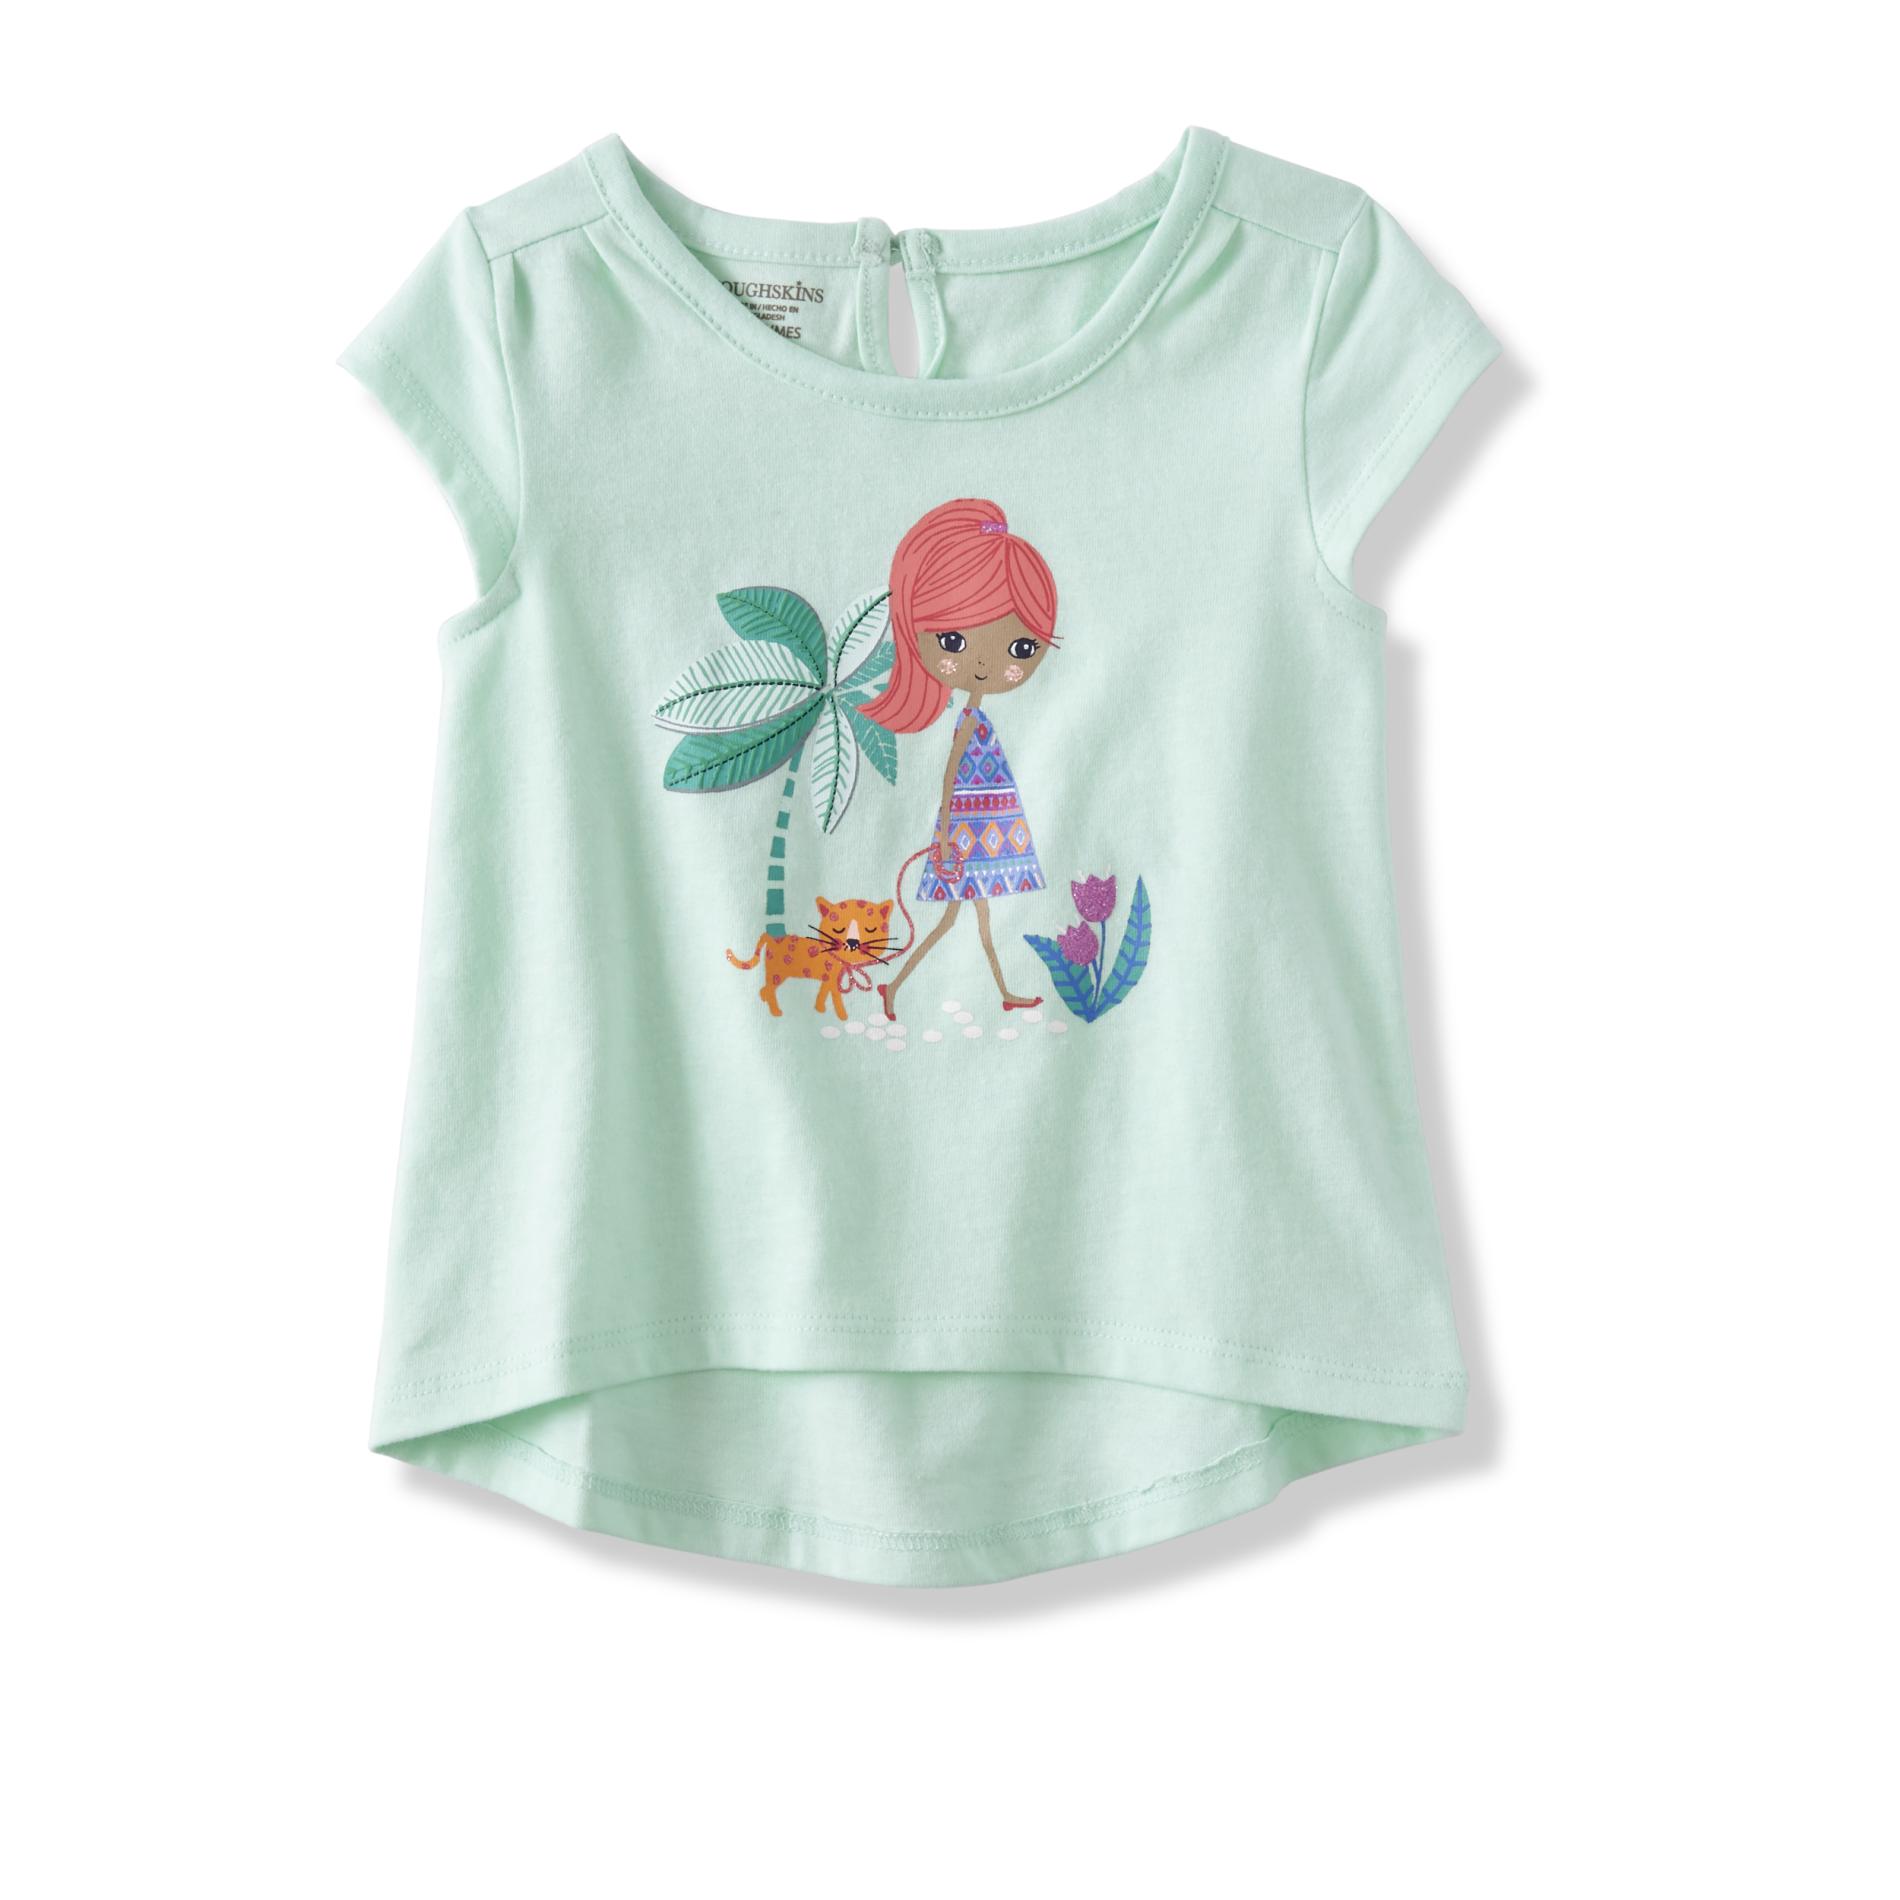 Toughskins Infant Girls' Cap Sleeve Graphic T-Shirt - Girl & Cat